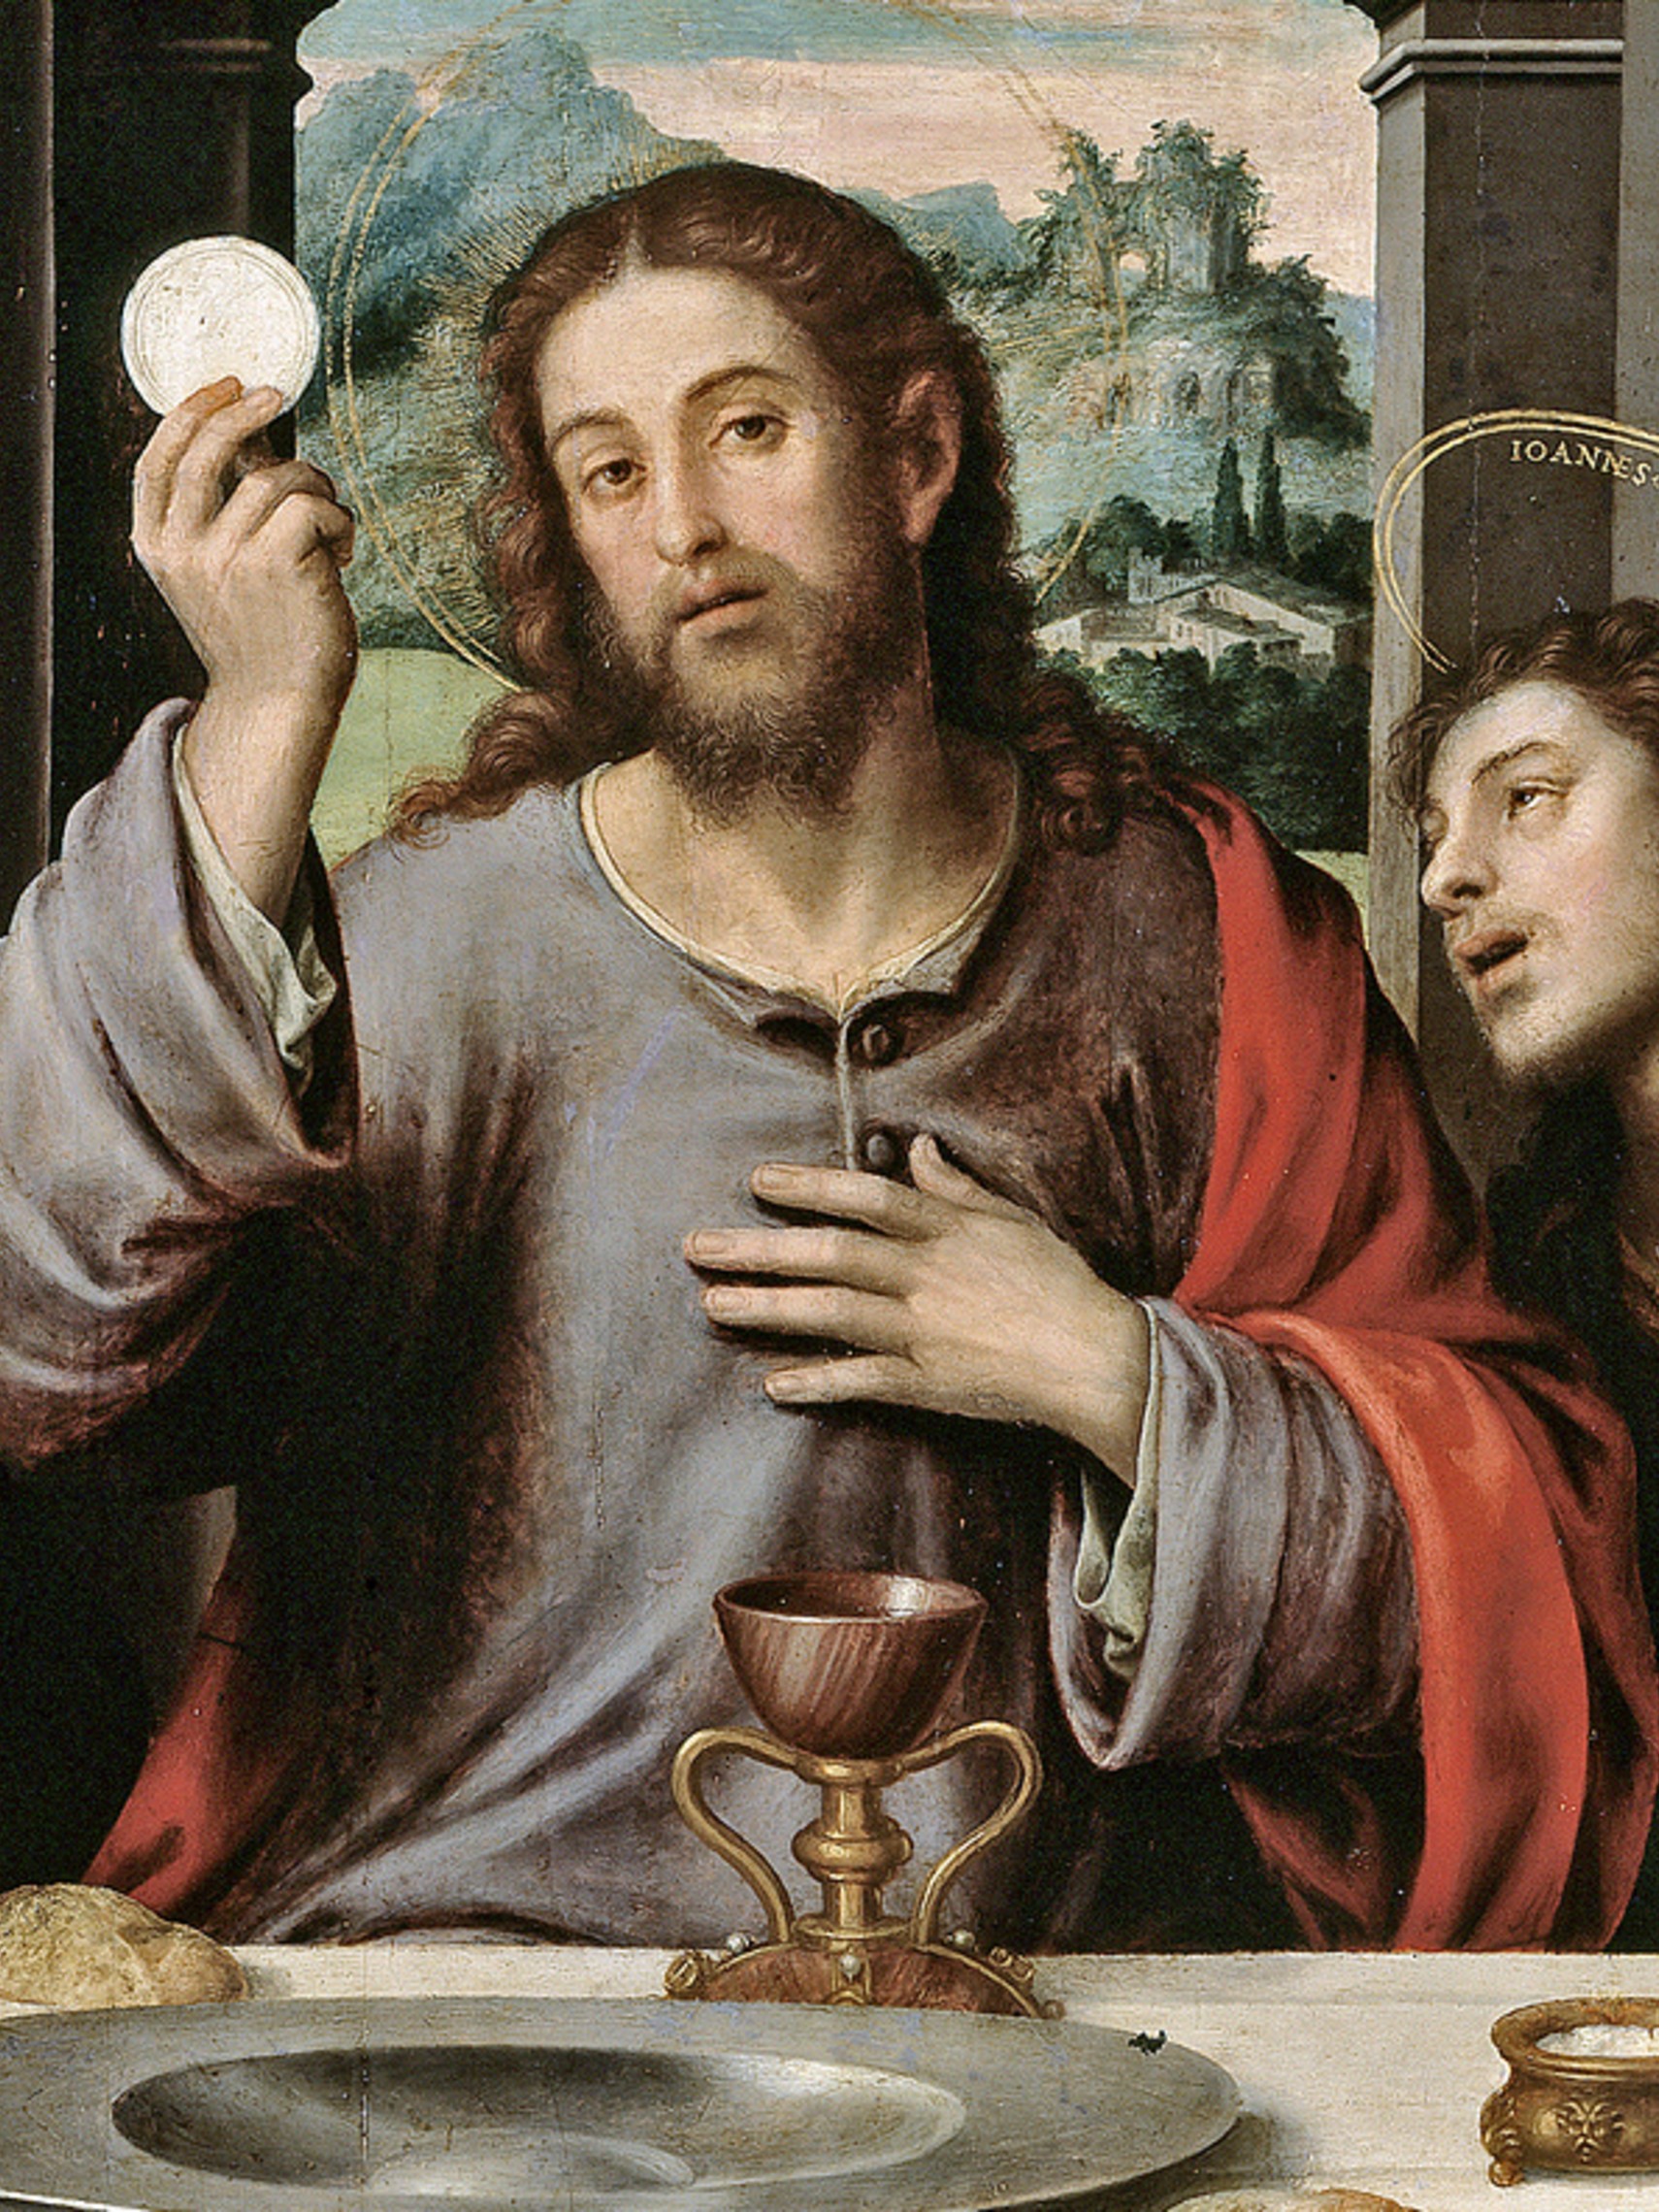 Jesus and the Eucharist